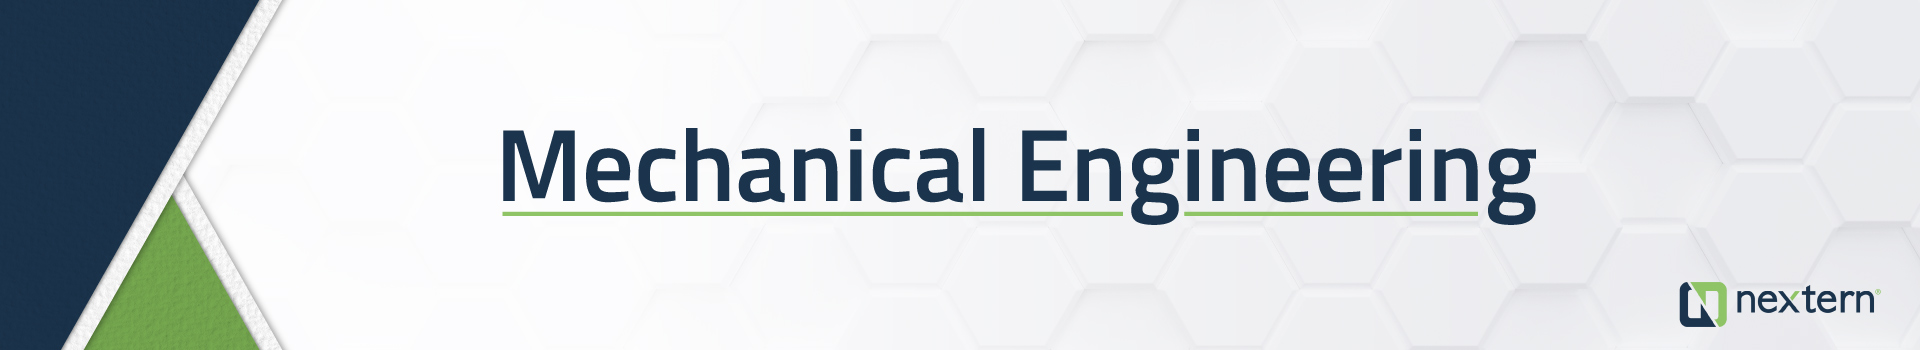 Nextern website banner features text "Mechanical Engineering" with Nextern logo